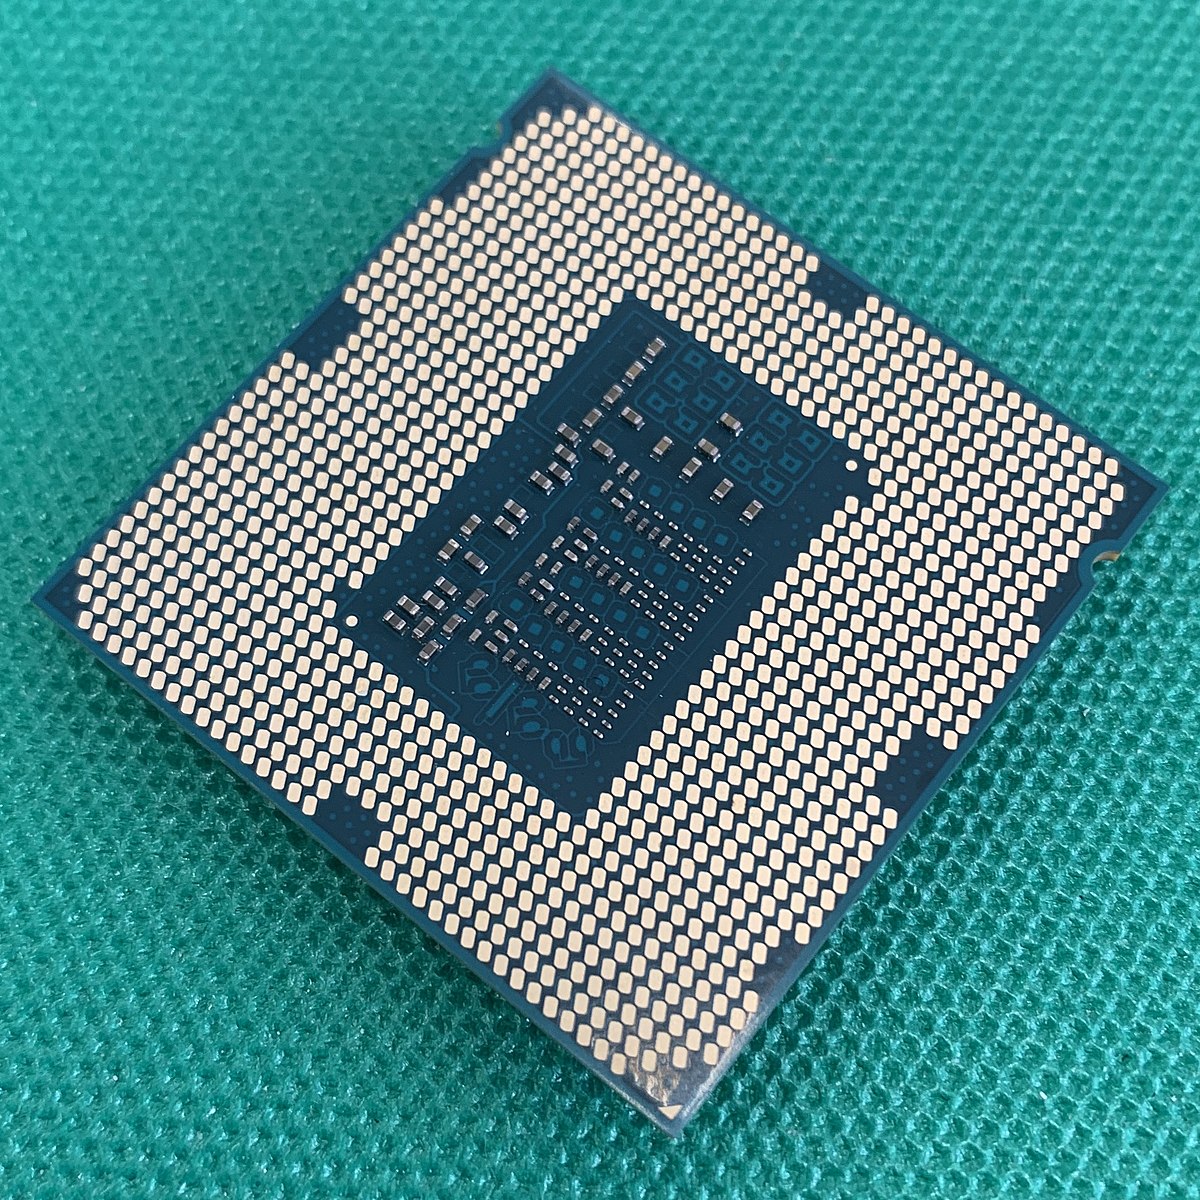 File:Intel Core i5-4590 Socket FCLGA1150.jpg - Wikimedia Commons